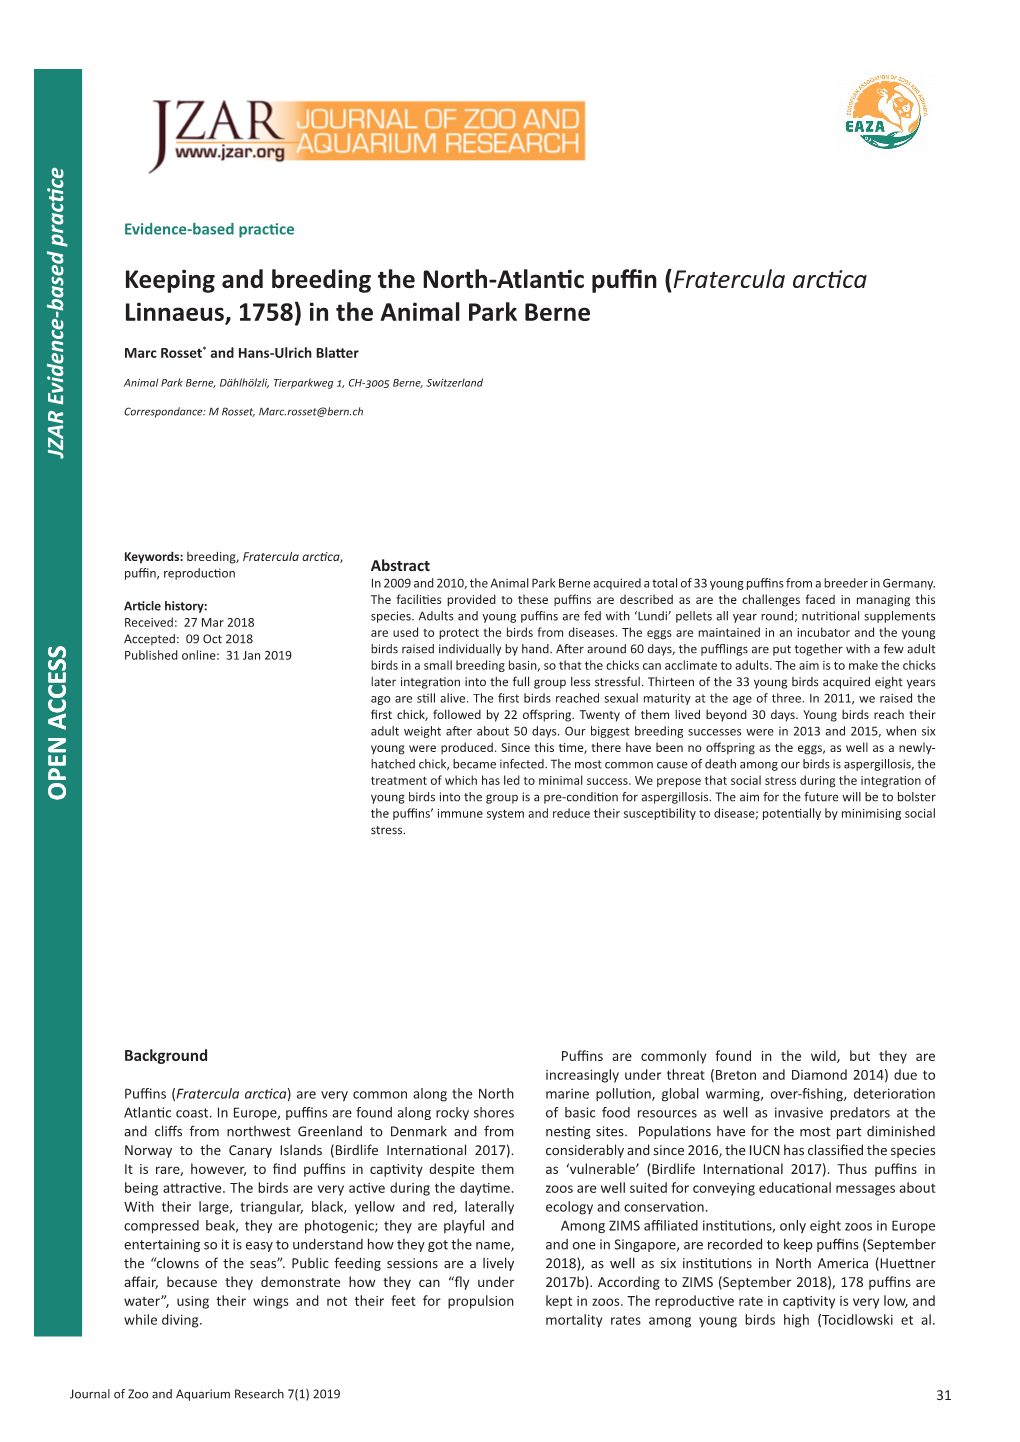 Keeping and Breeding the North-Atlantic Puffin (Fratercula